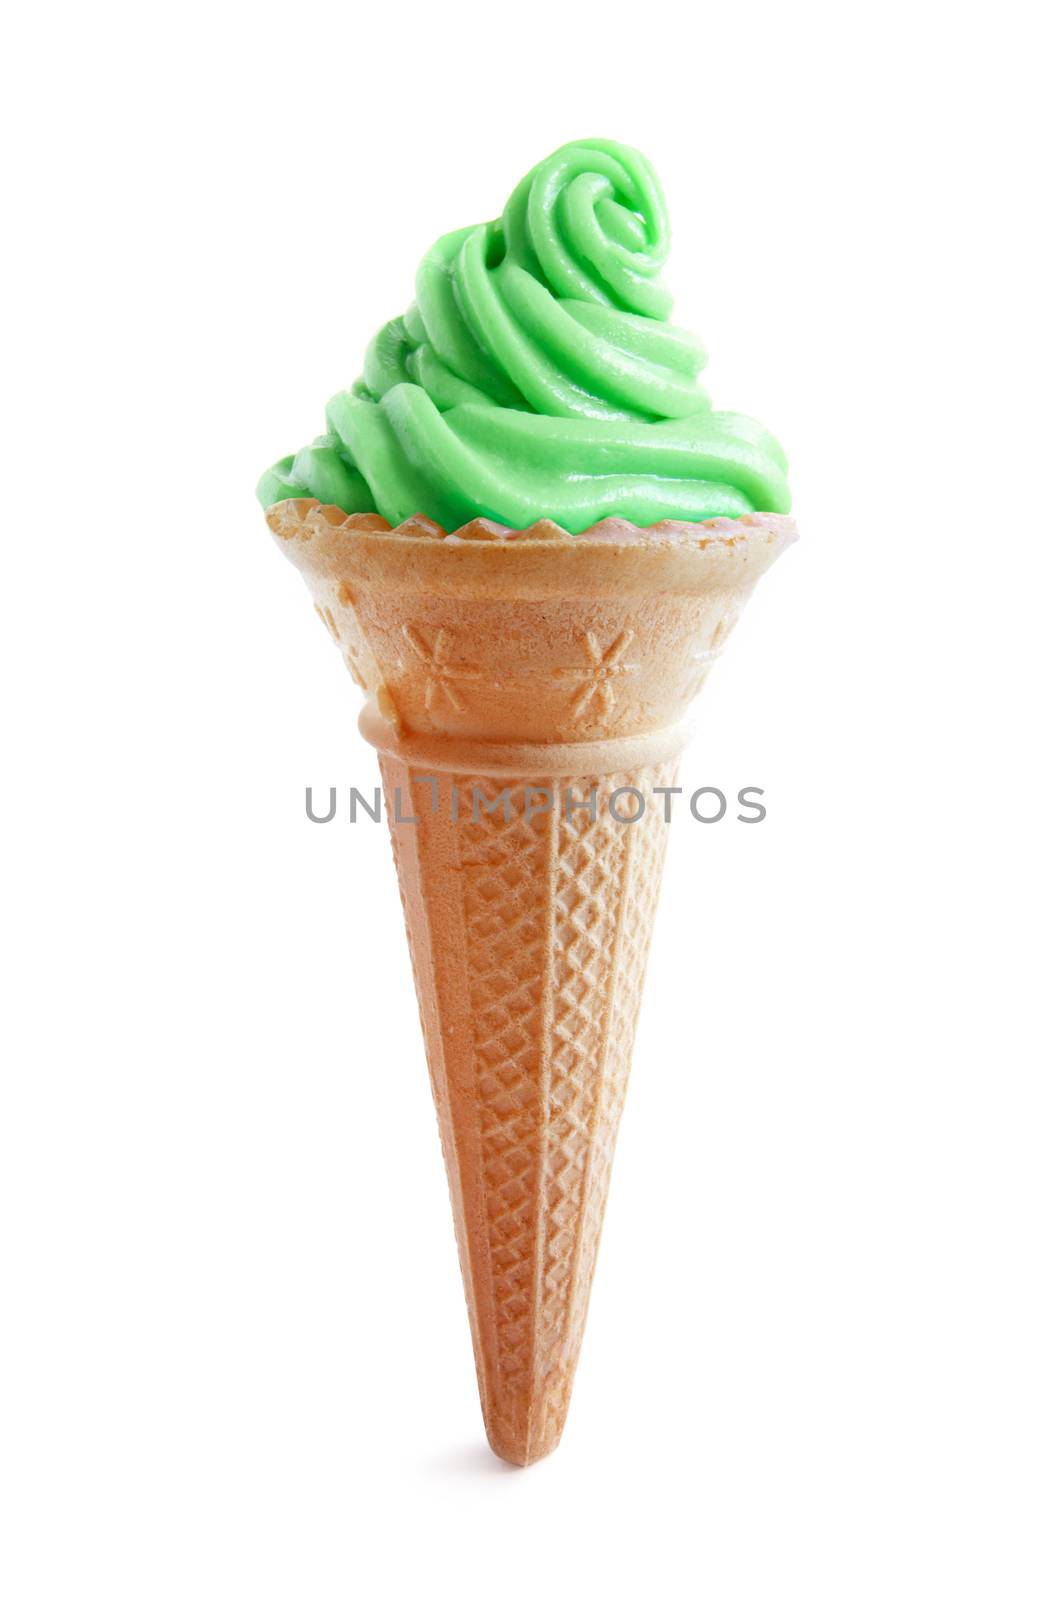 Mint ice cream cone over a white background